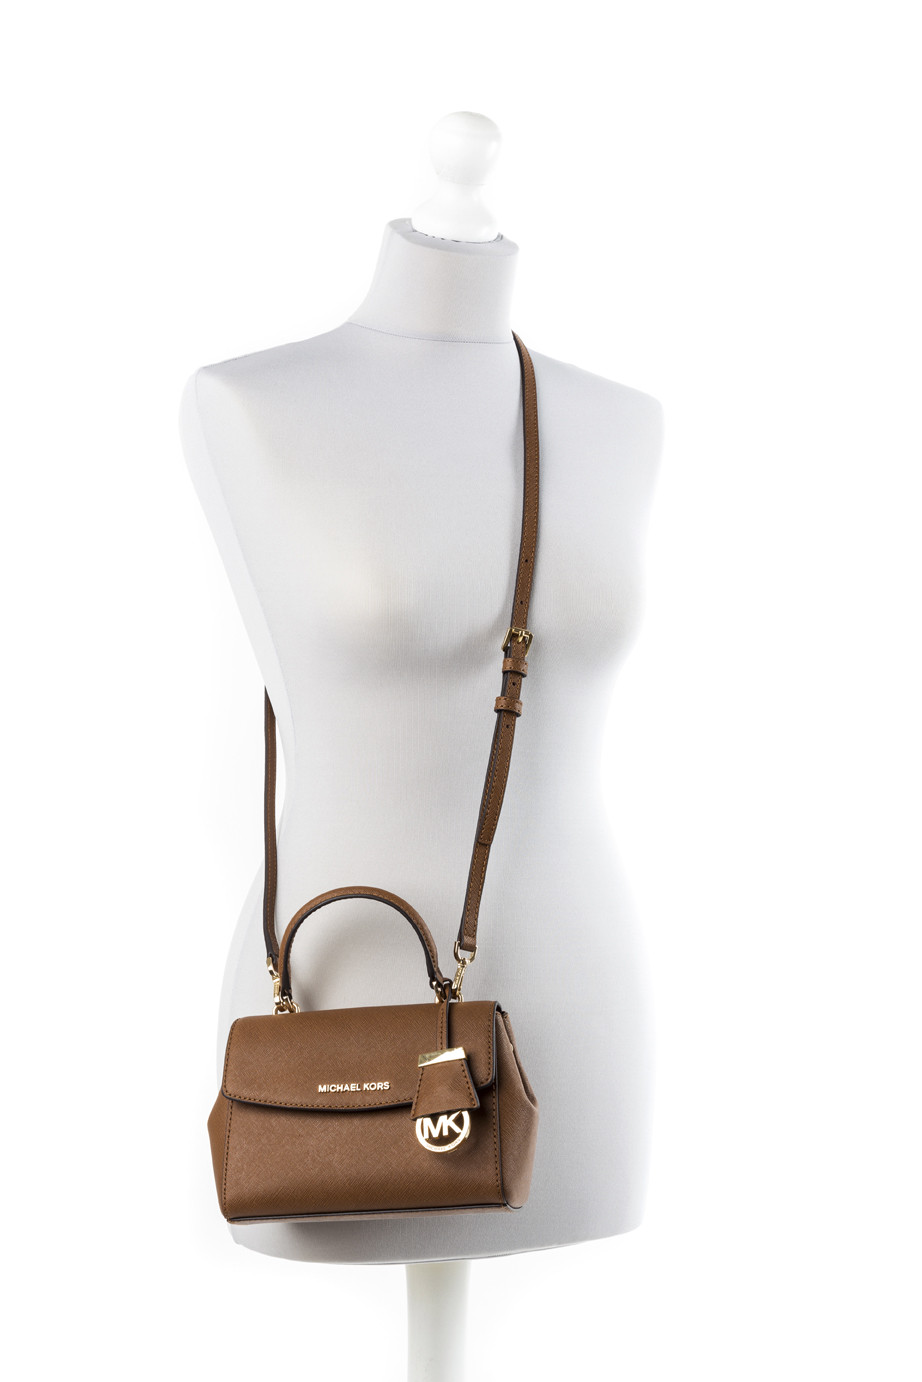 Michael Kors Ava Extra Small Saffiano Leather Satchel - Luggage 32F5GAVC1L  889154534971 - Handbags, Ava - Jomashop